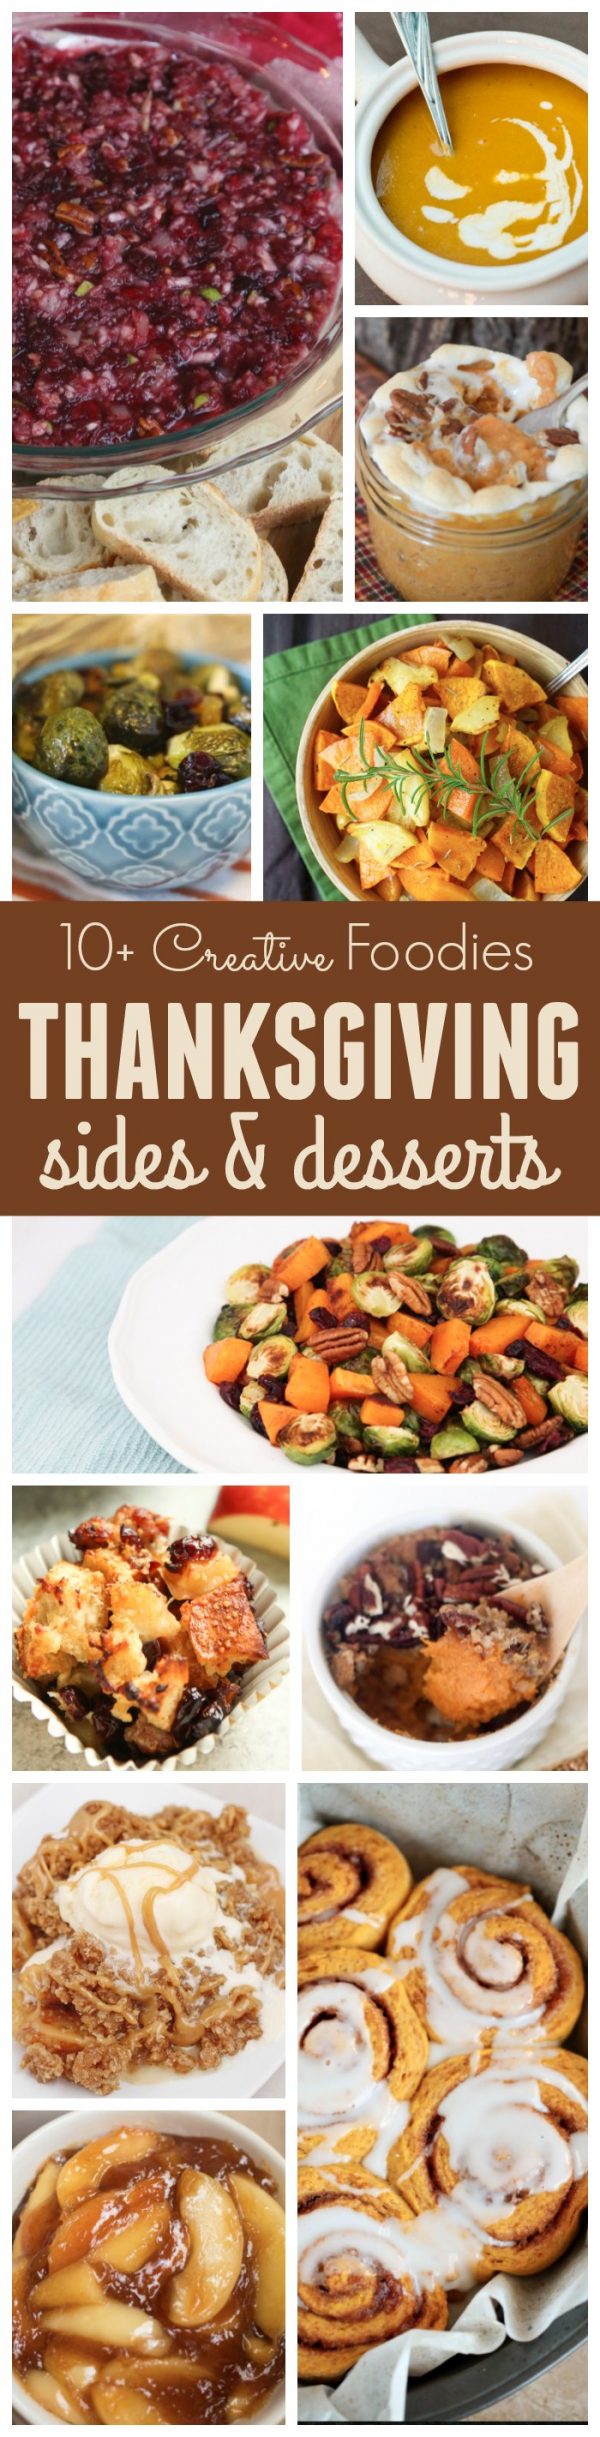 10-thanksgiving-sides-desserts-recipes